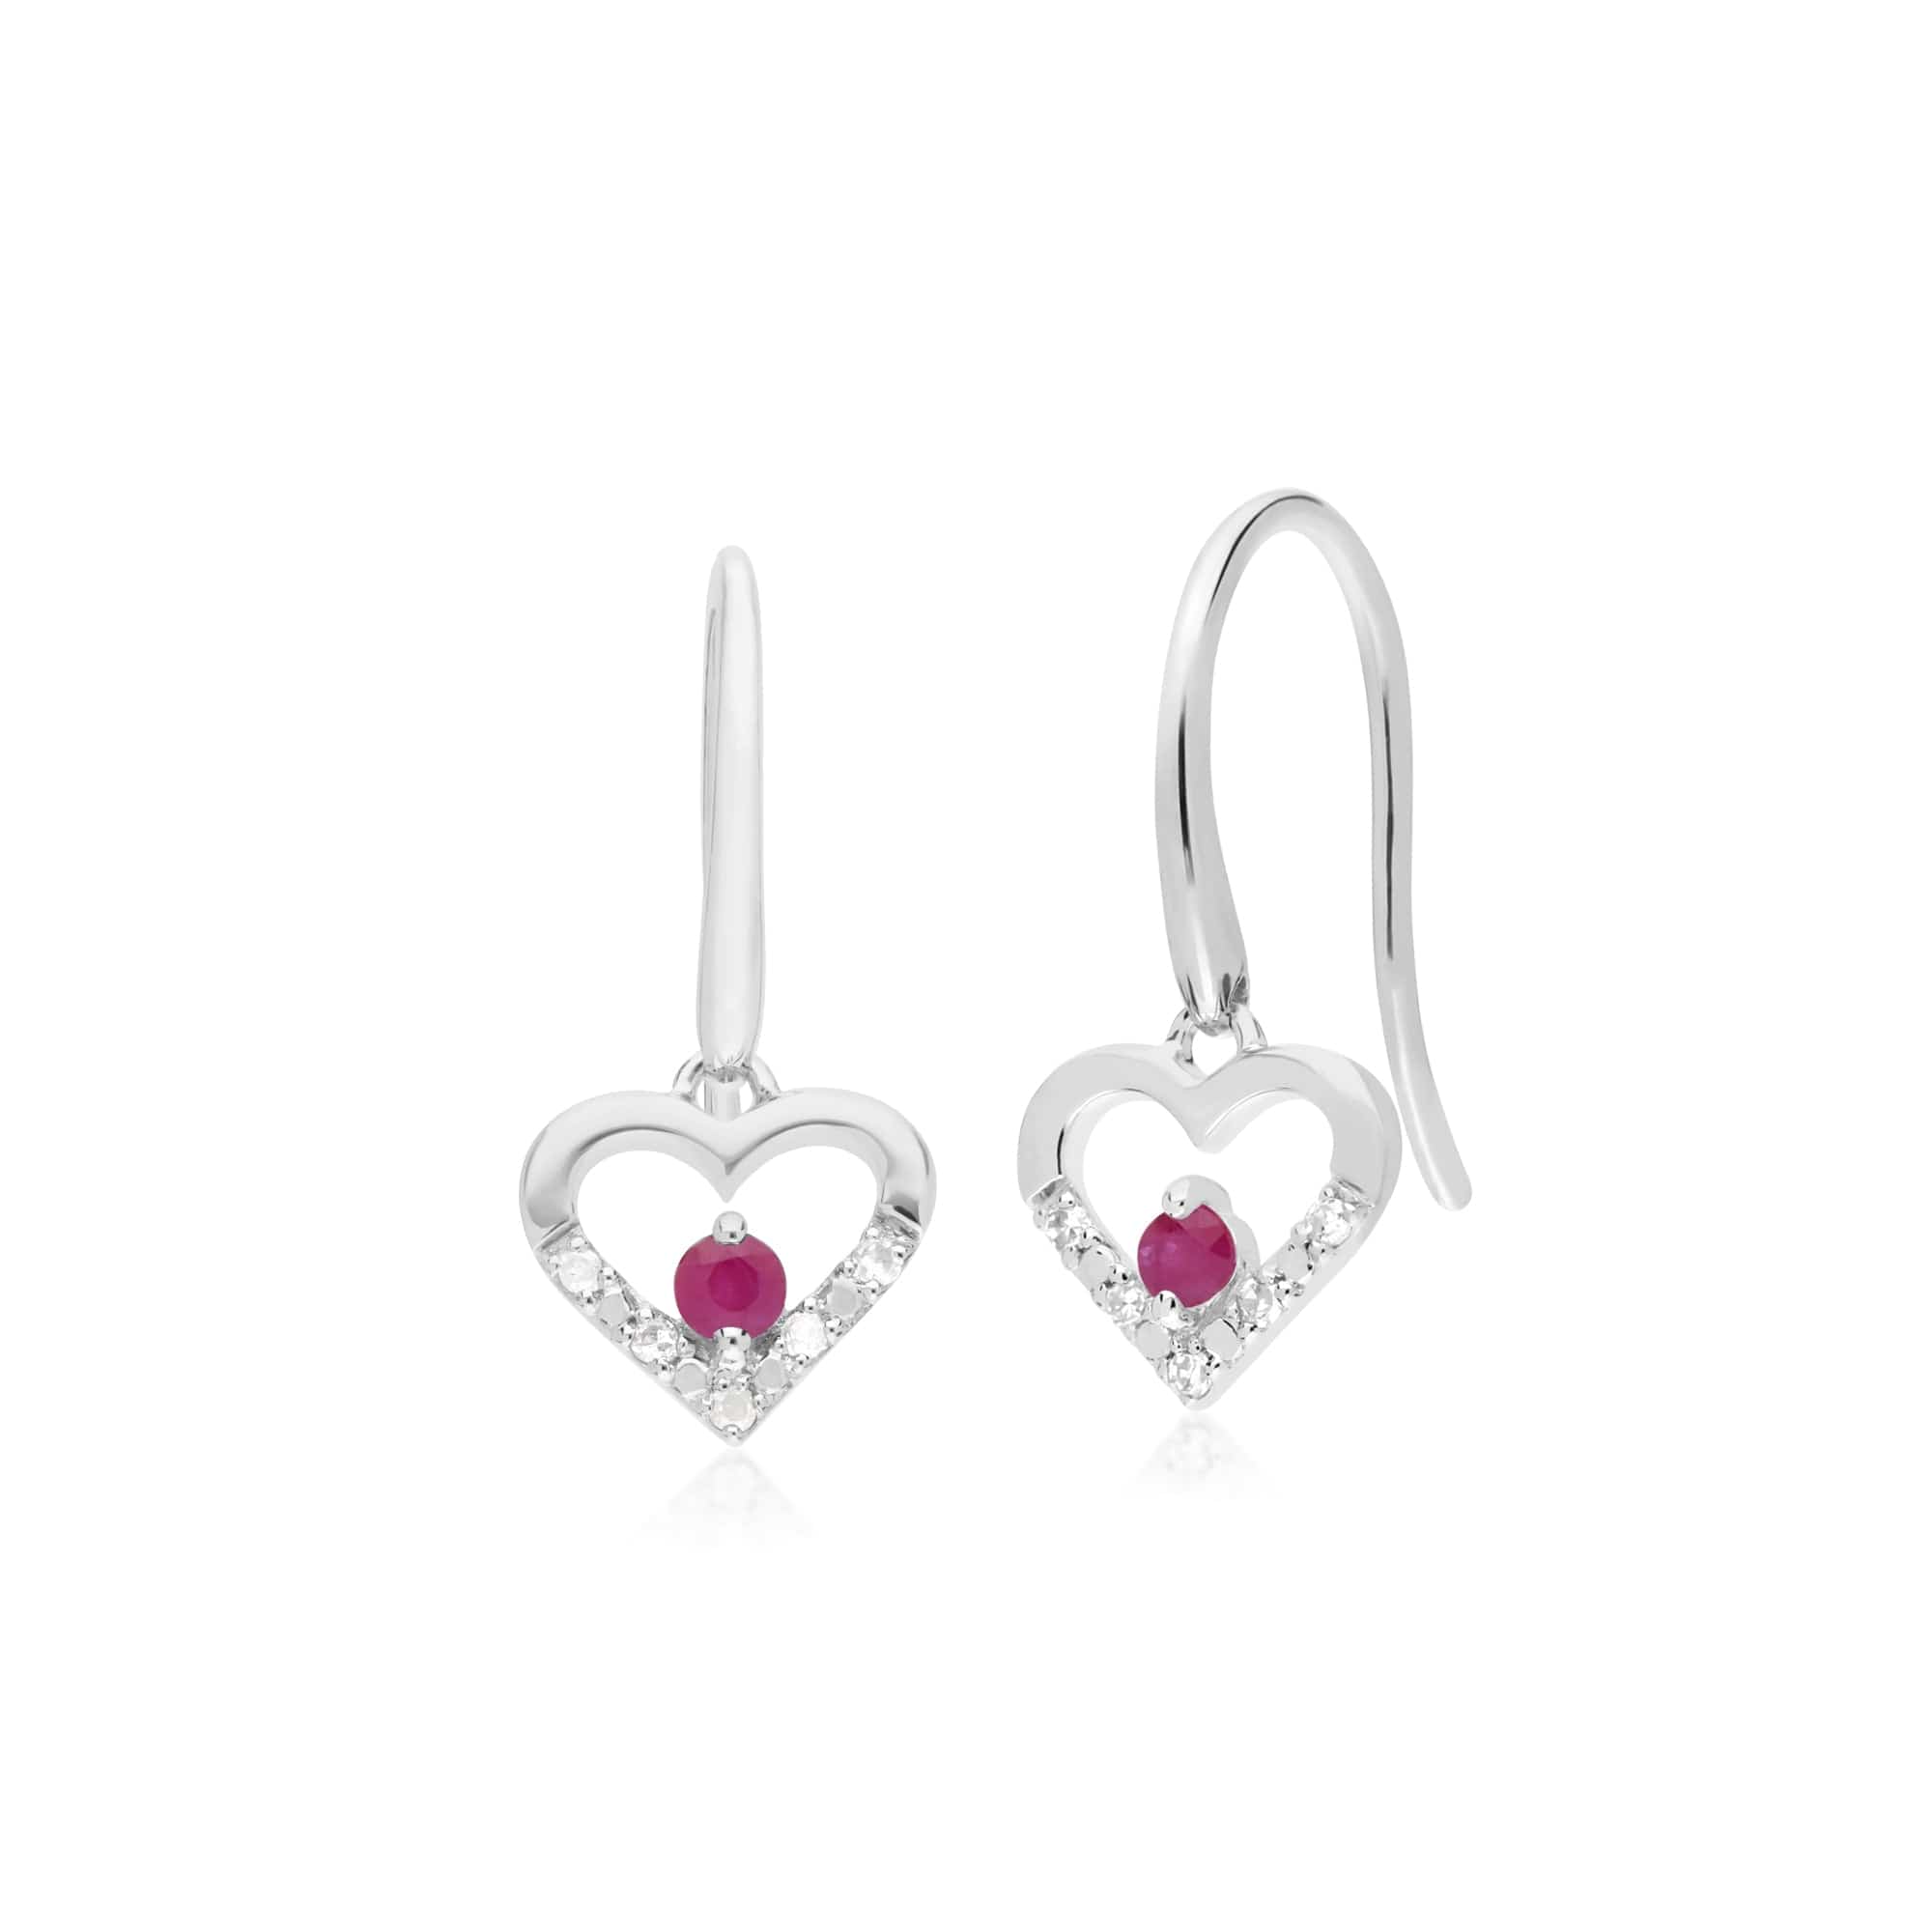 162E0258019-162P0219019 Classic Round Ruby & Diamond Heart Drop Earrings & Pendant Set in 9ct White Gold 2